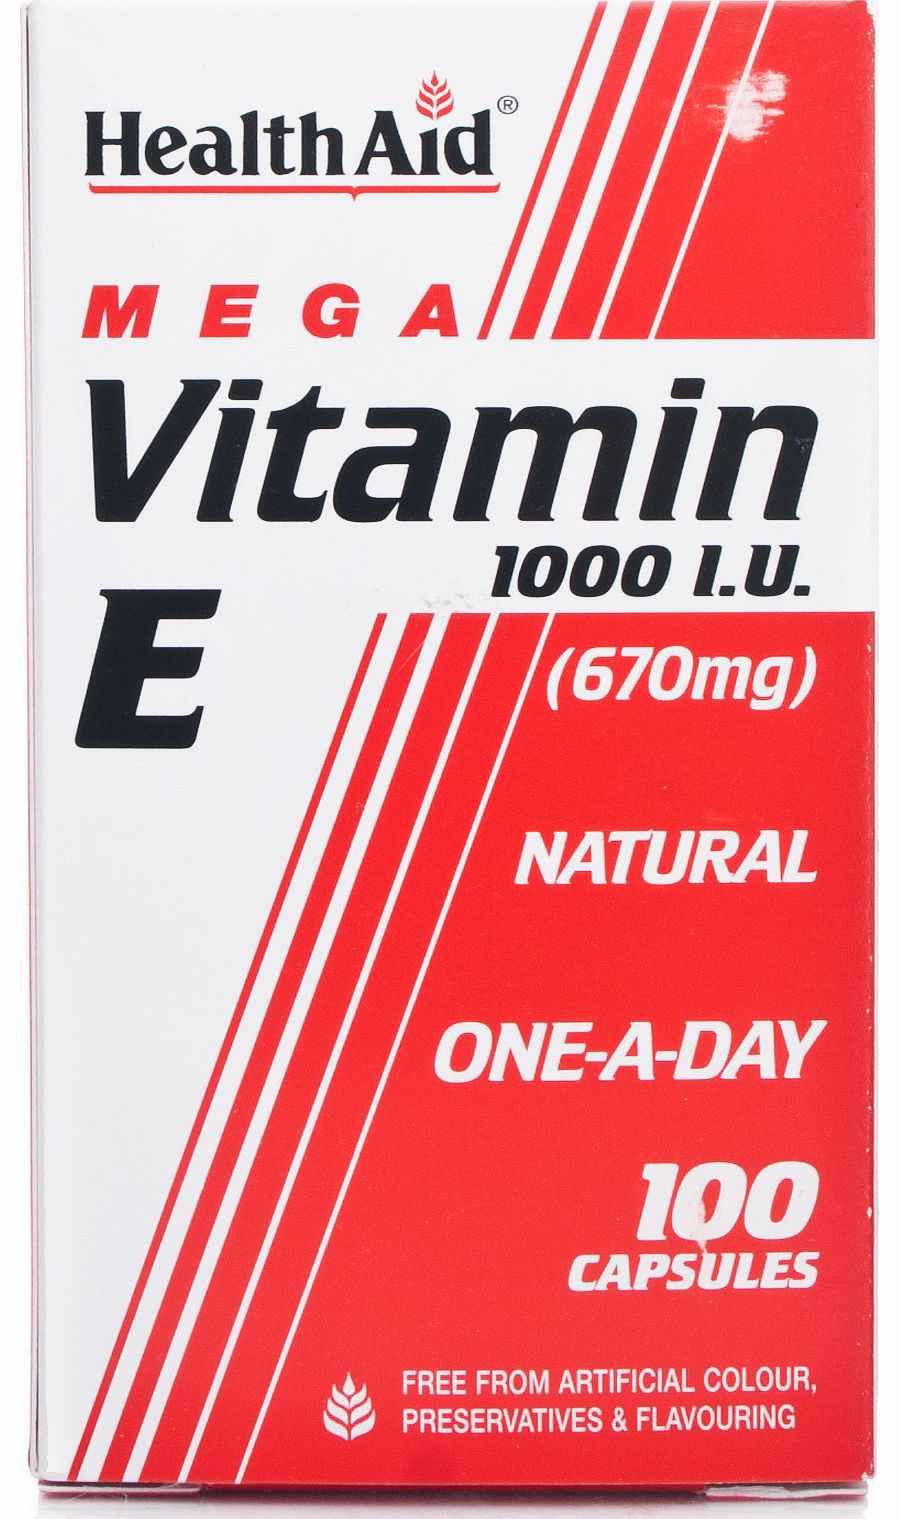 Healthaid Vitamin E 1000iu (670mg)